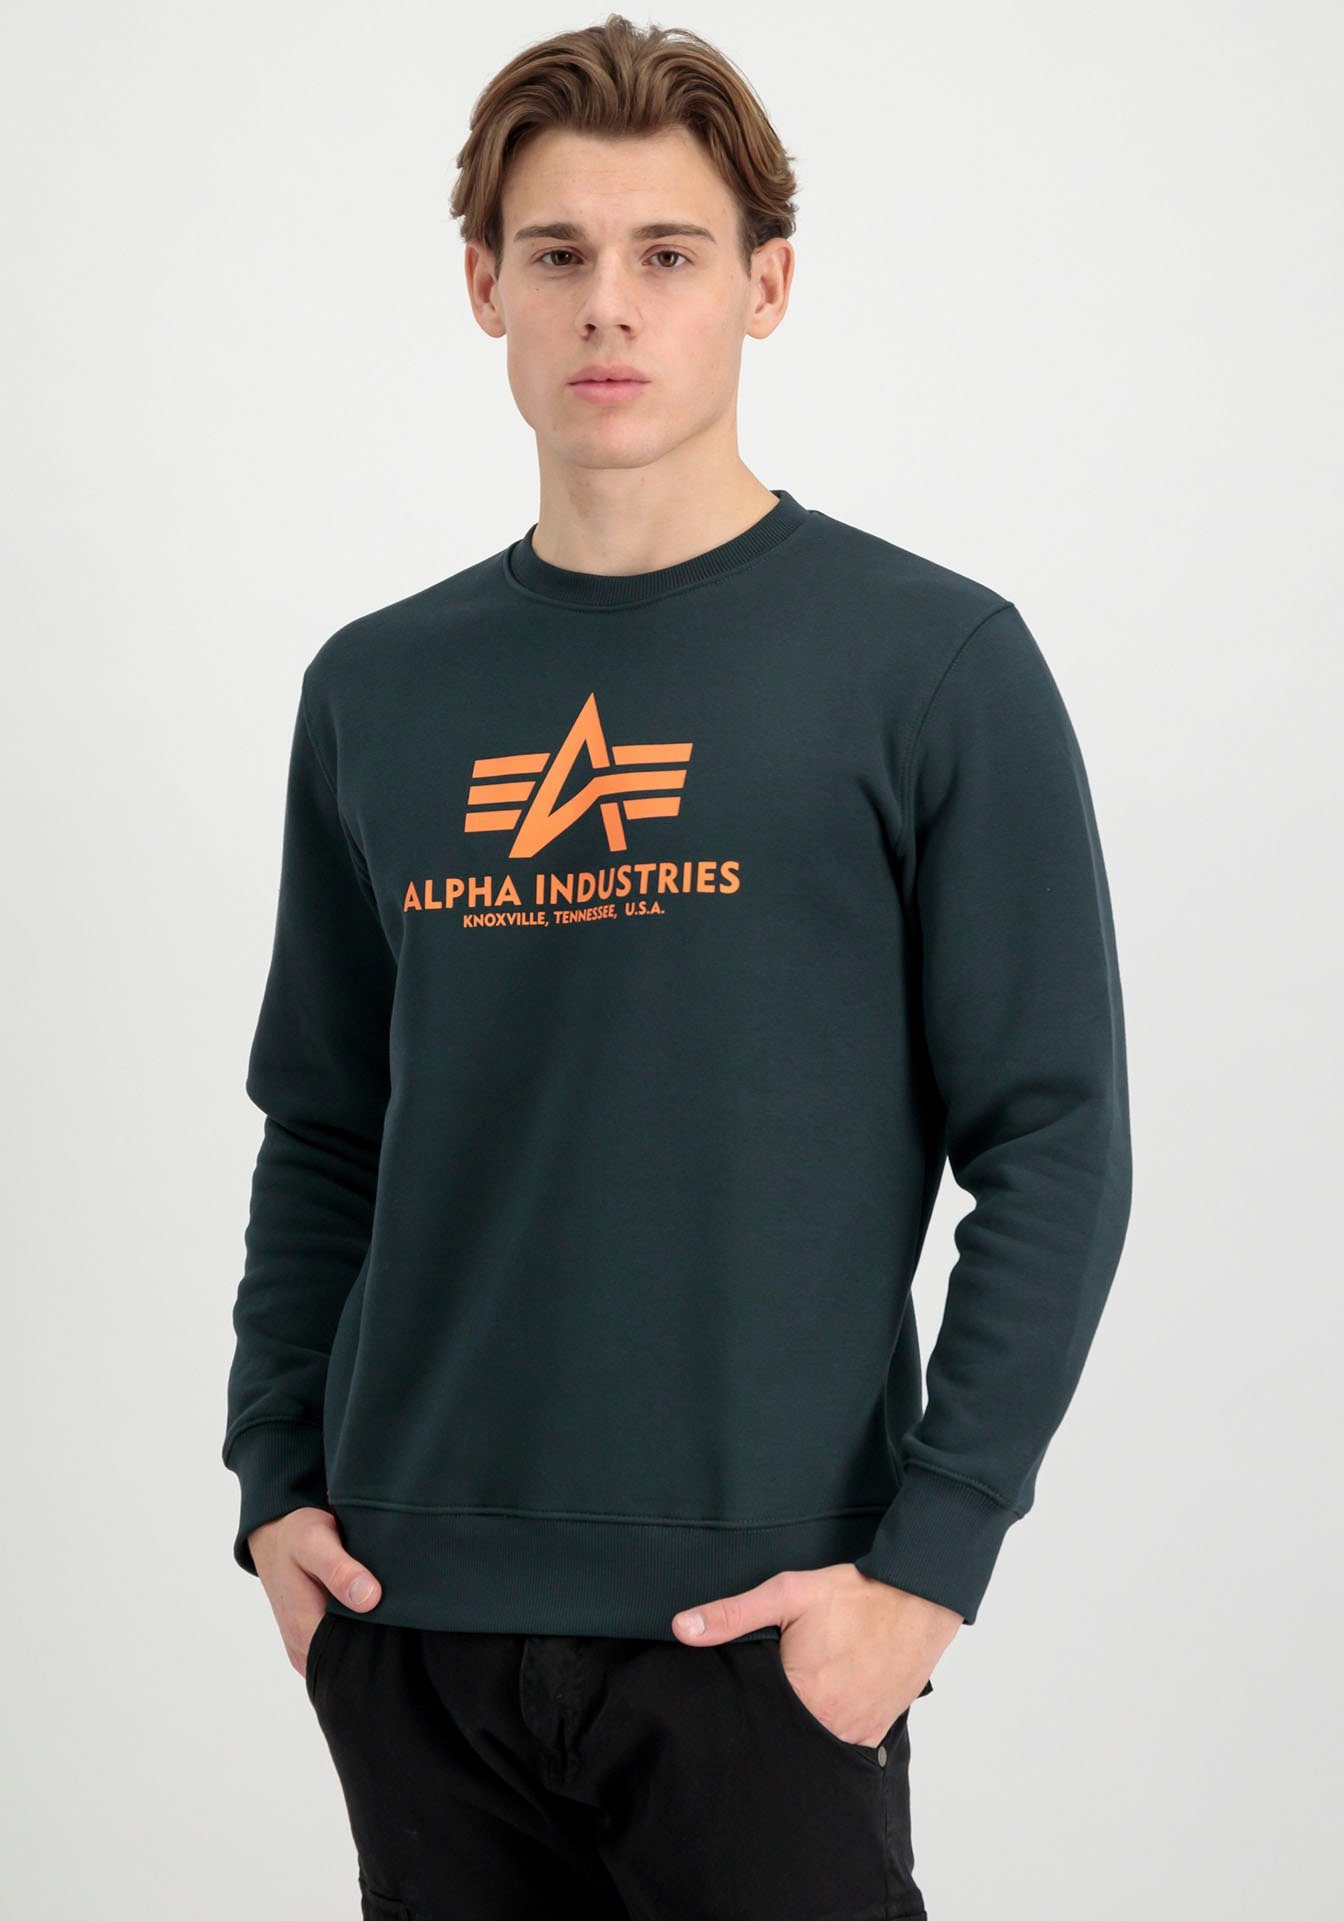 Alpha Industries Sweatshirt Sweater petrol dark Basic